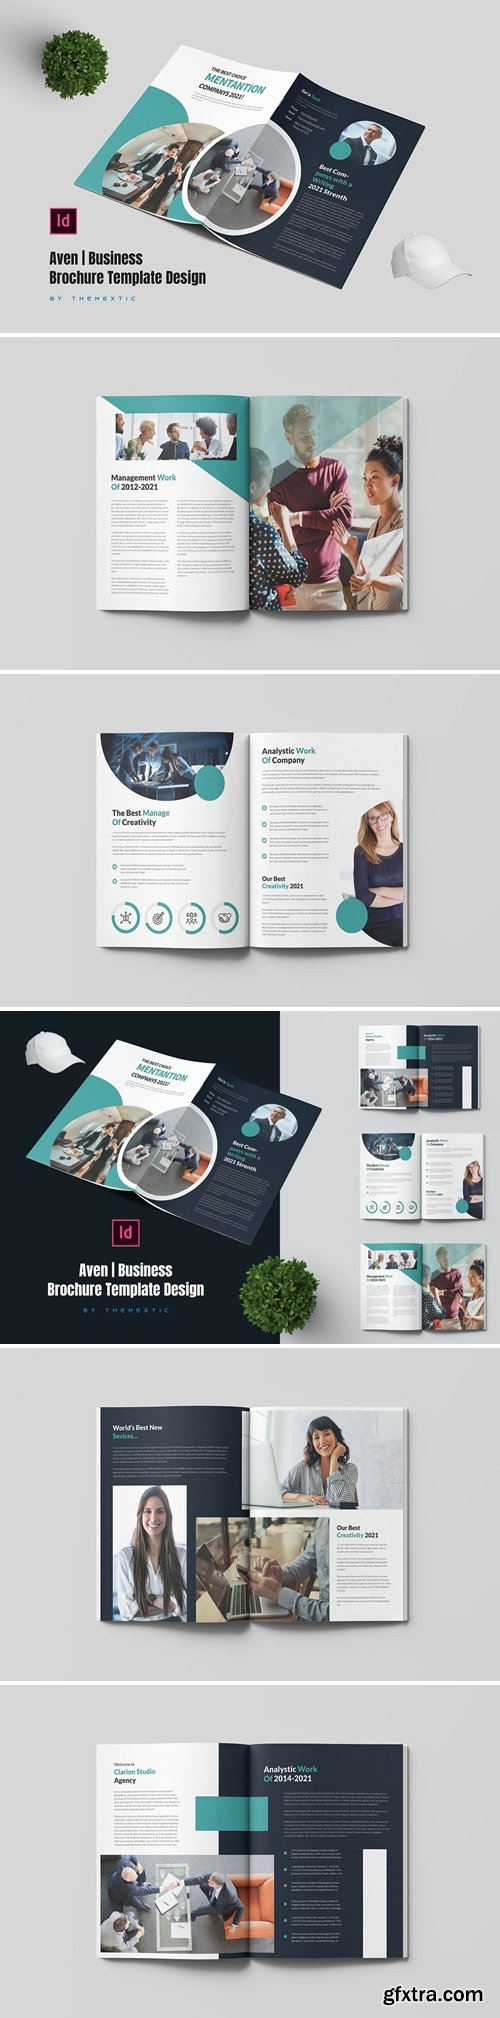 Aven | Business Brochure Template Design